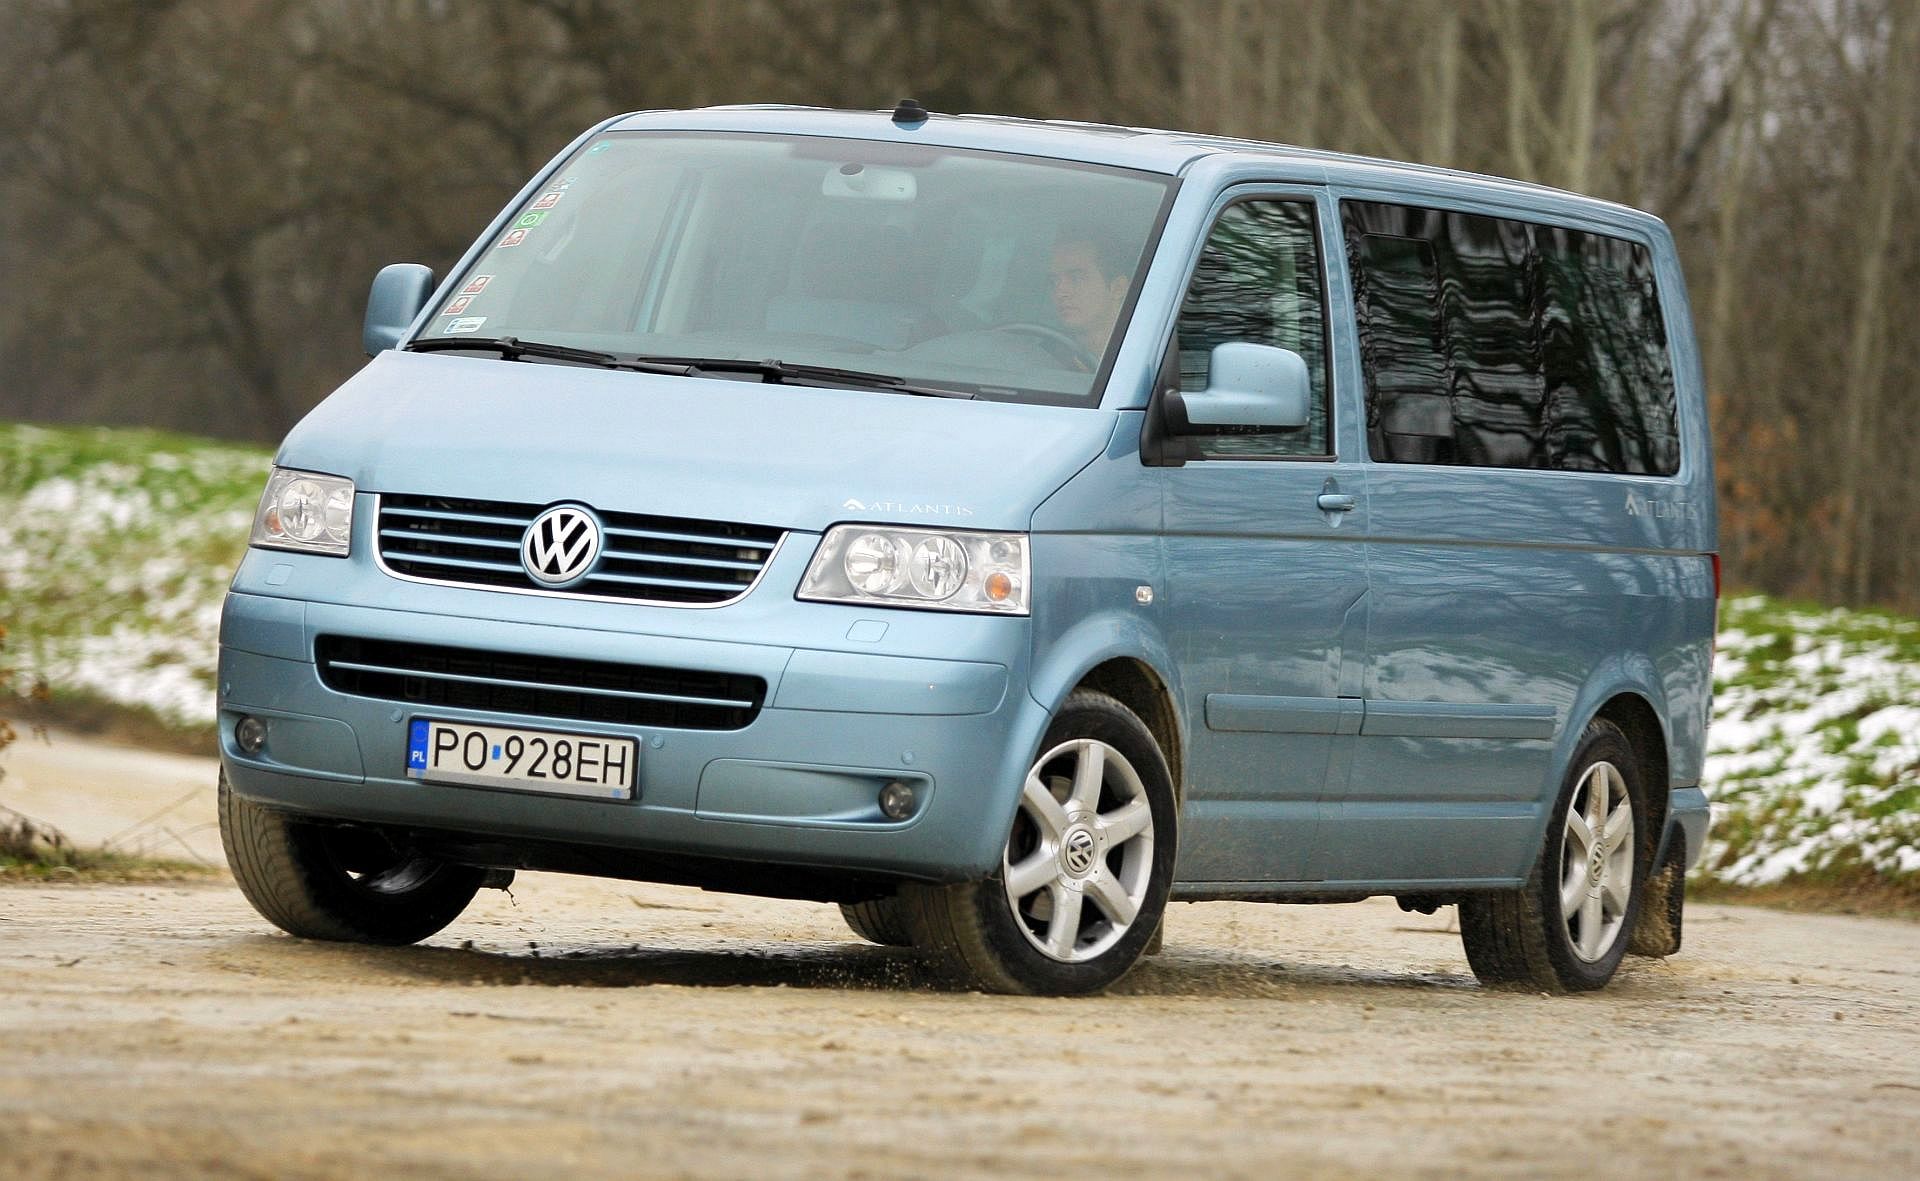 Uzywany Volkswagen Transporter T5 03 15 Opinie Dane Techniczne Usterki